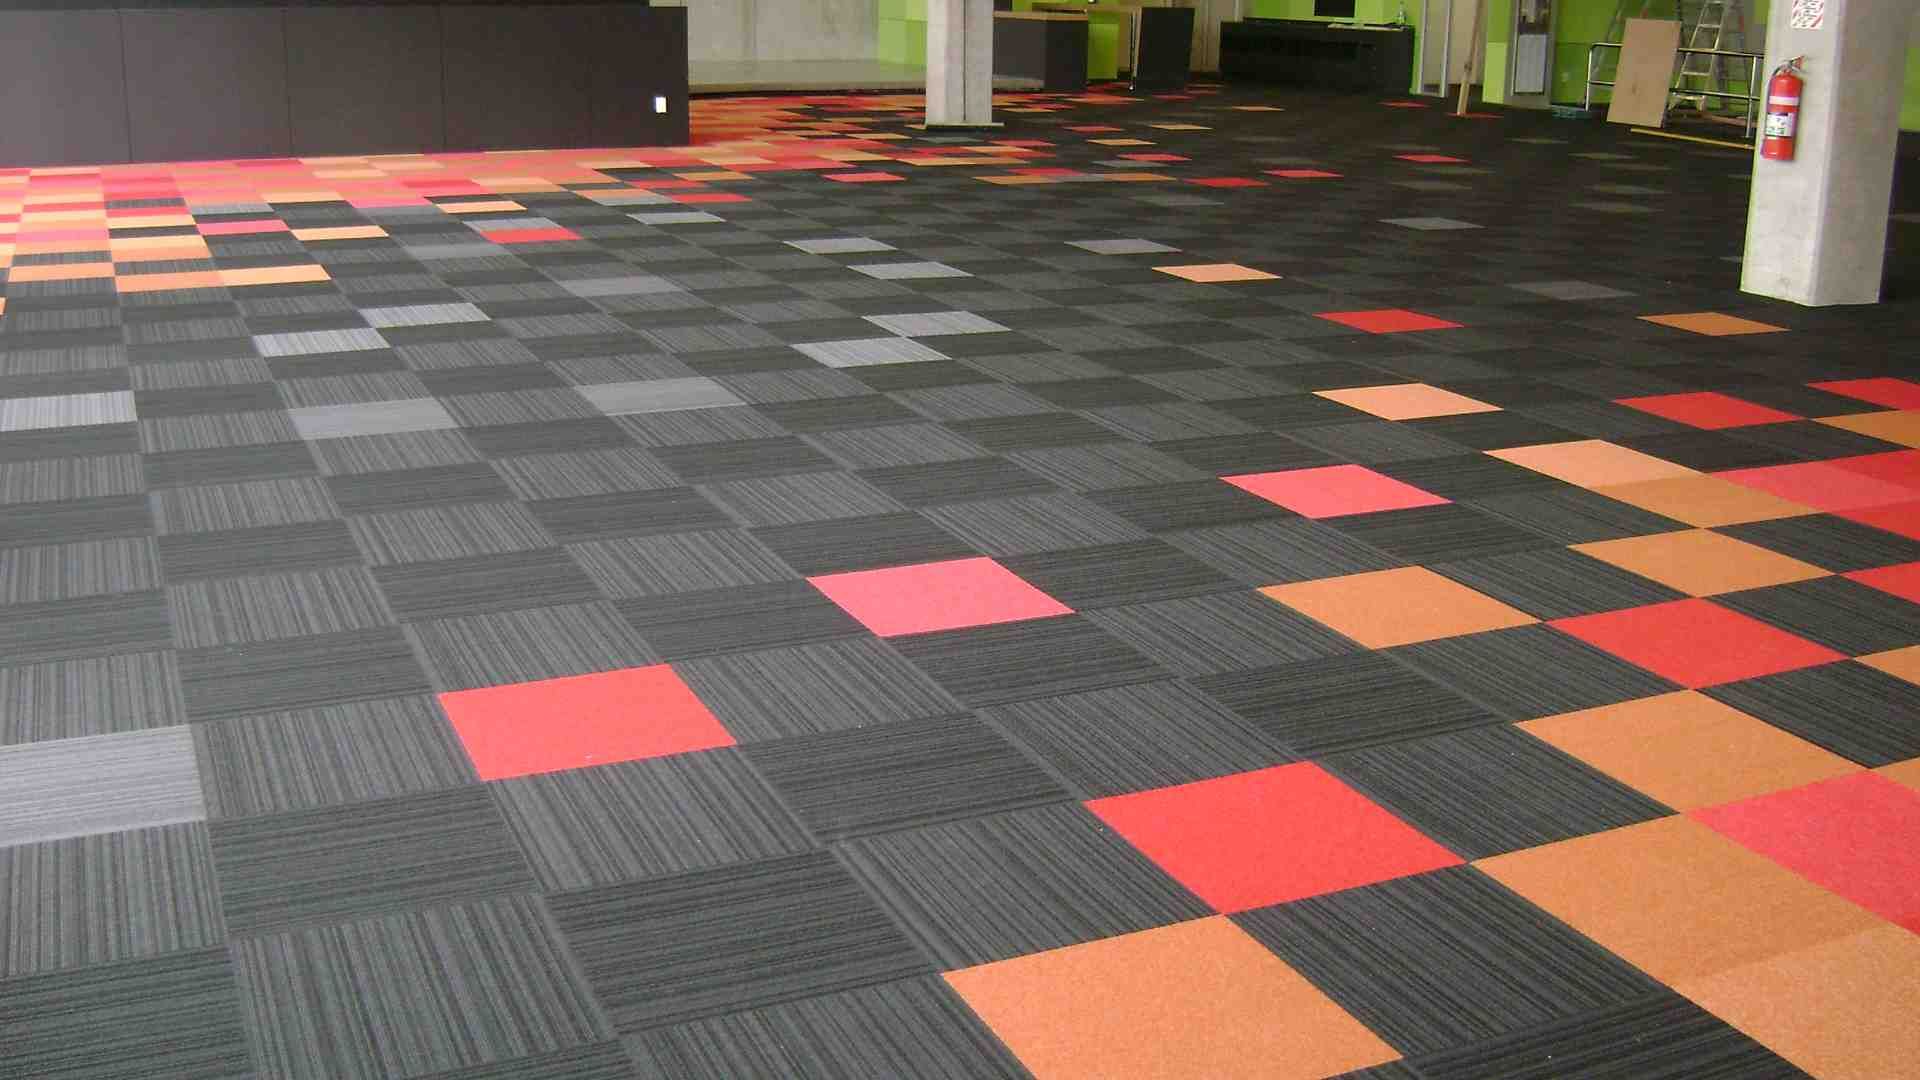 Carpet Tiles Manufacturers Company In Delhi Carpet Tiles Online In India